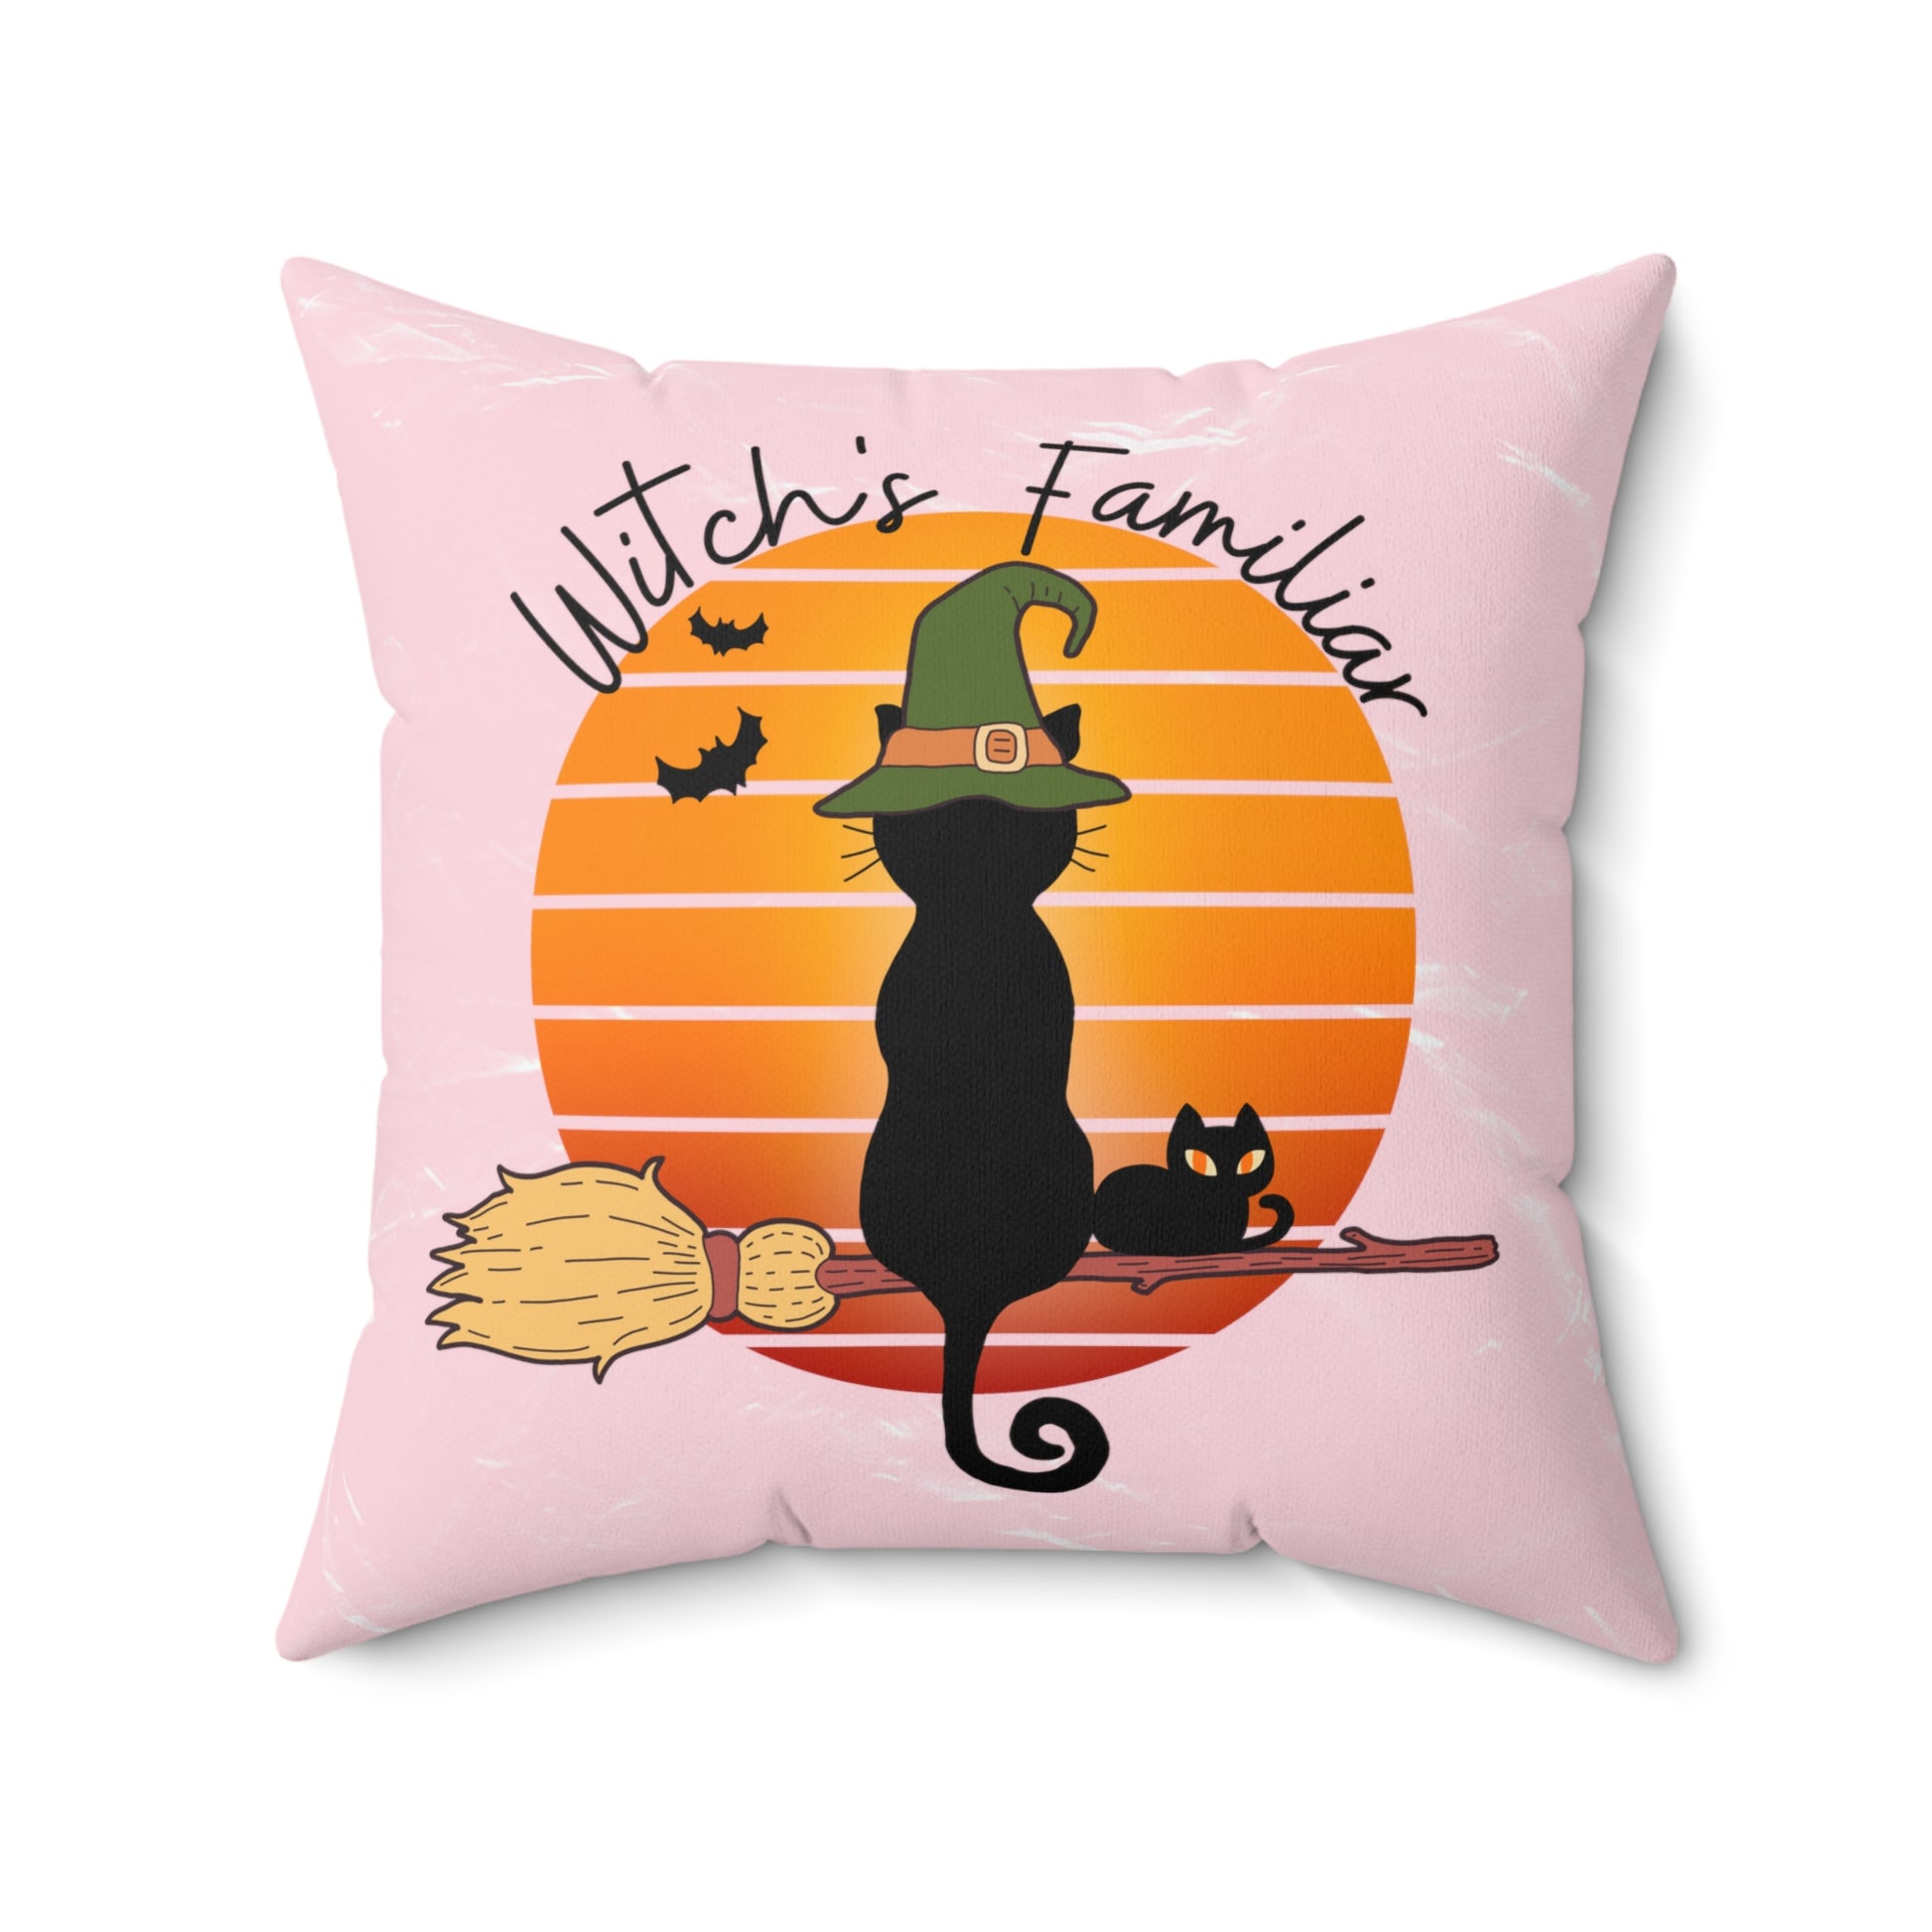 Witchy Cat Retro Vintage Sunset Square Pillow, Black Cat Familiar Pillow, Whimsical cushion, Celestial home decor, Mystical magical pillow